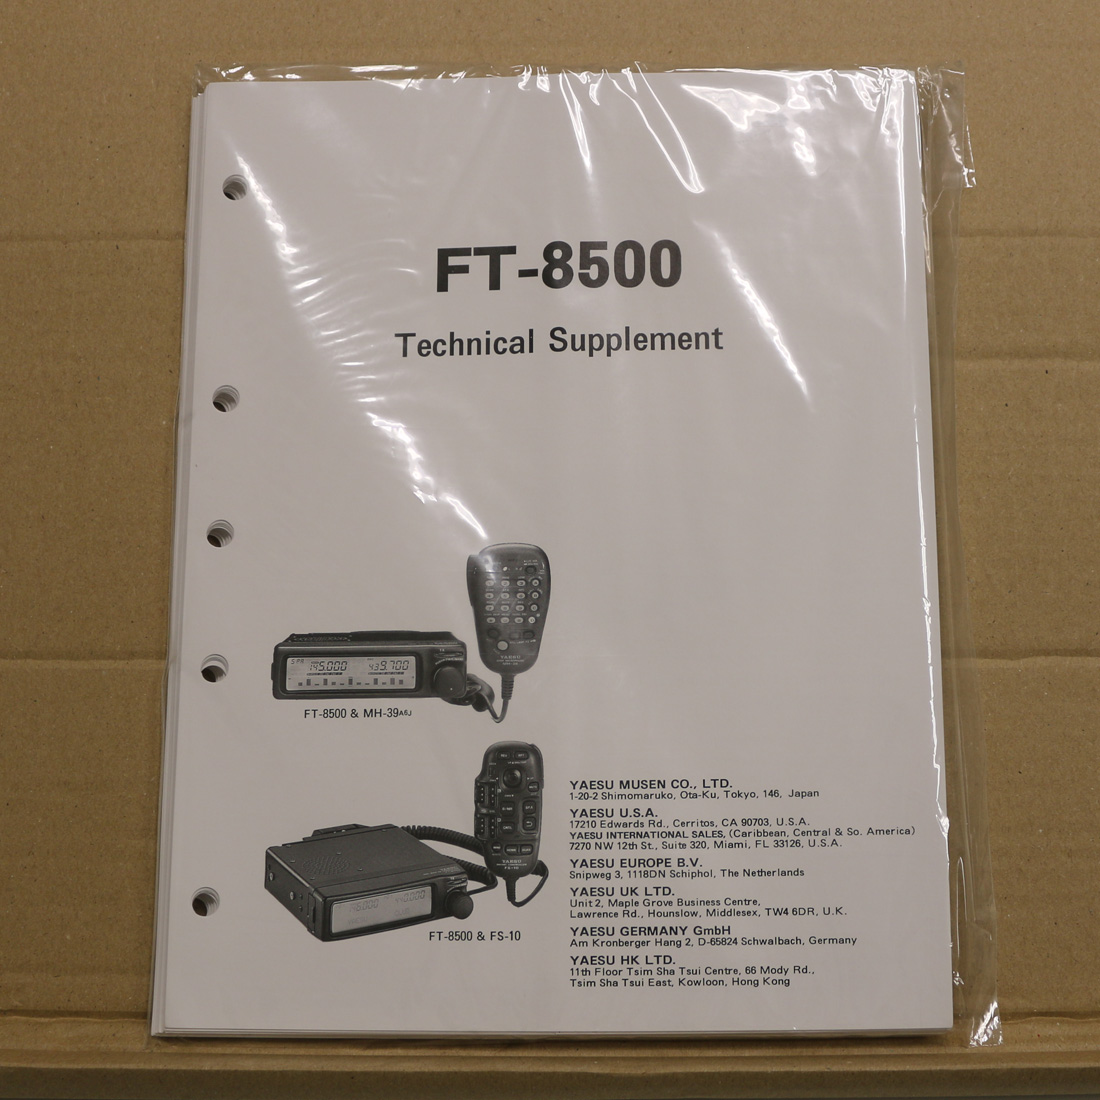 Yaesu FT-8500 Technical Supplement